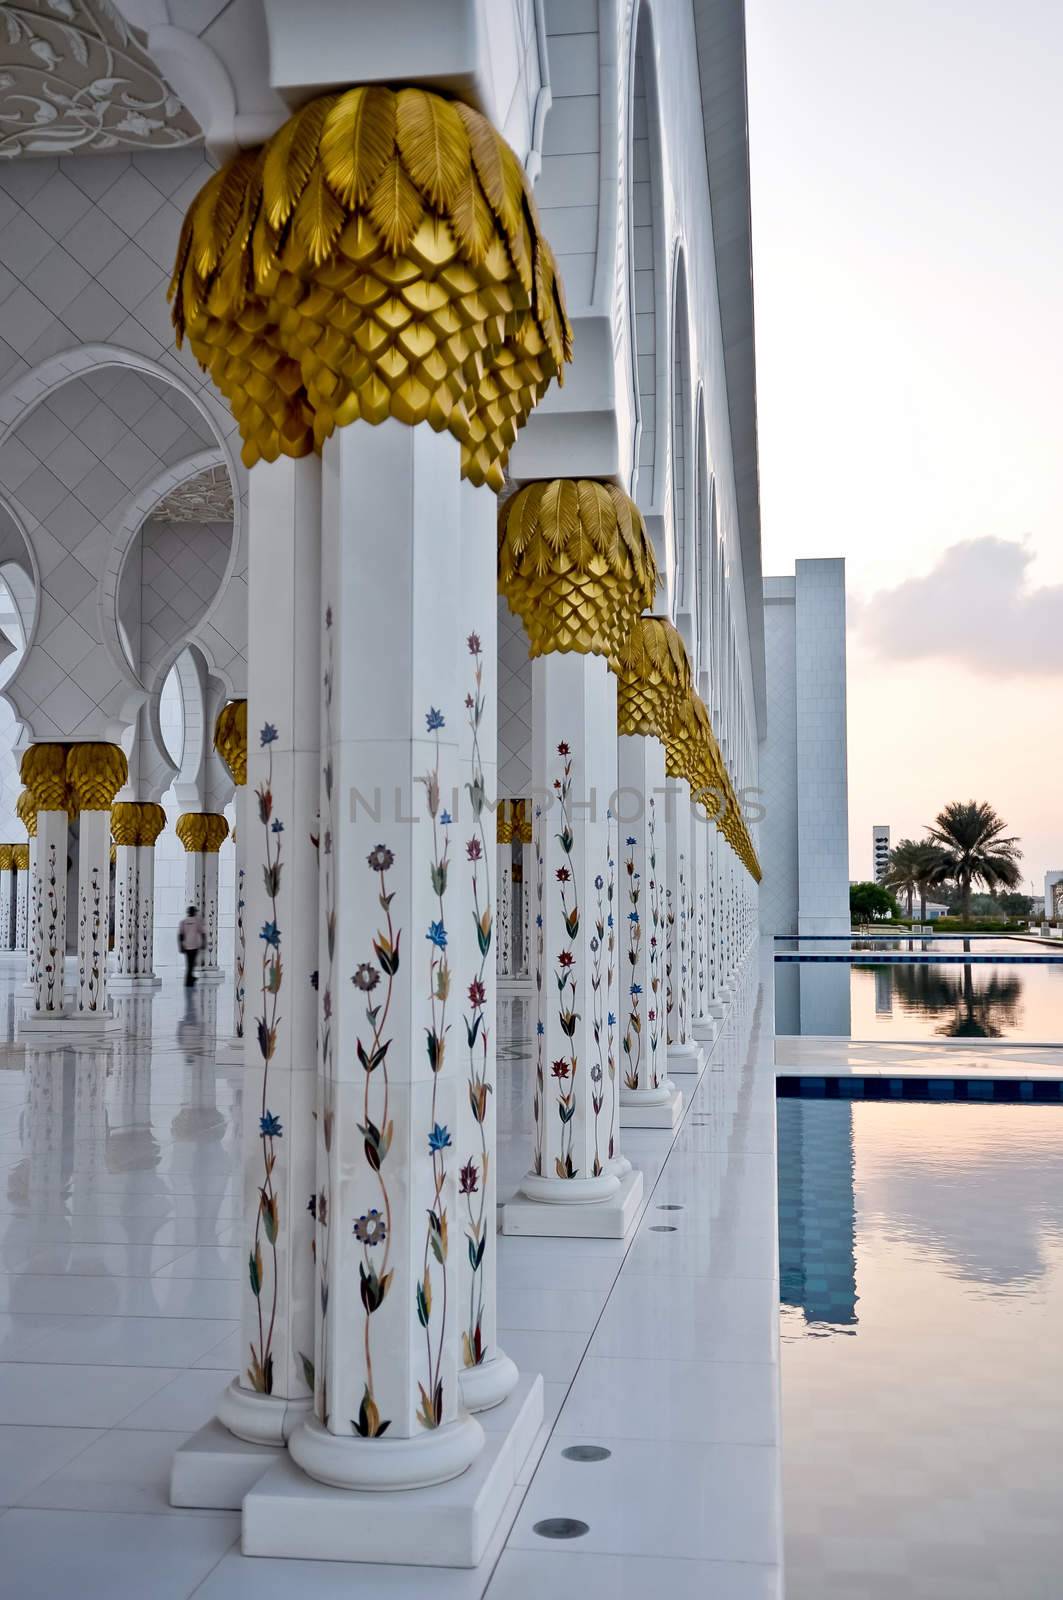 Sheikh Zayed Grand Mosque in Abu Dhabi UAE